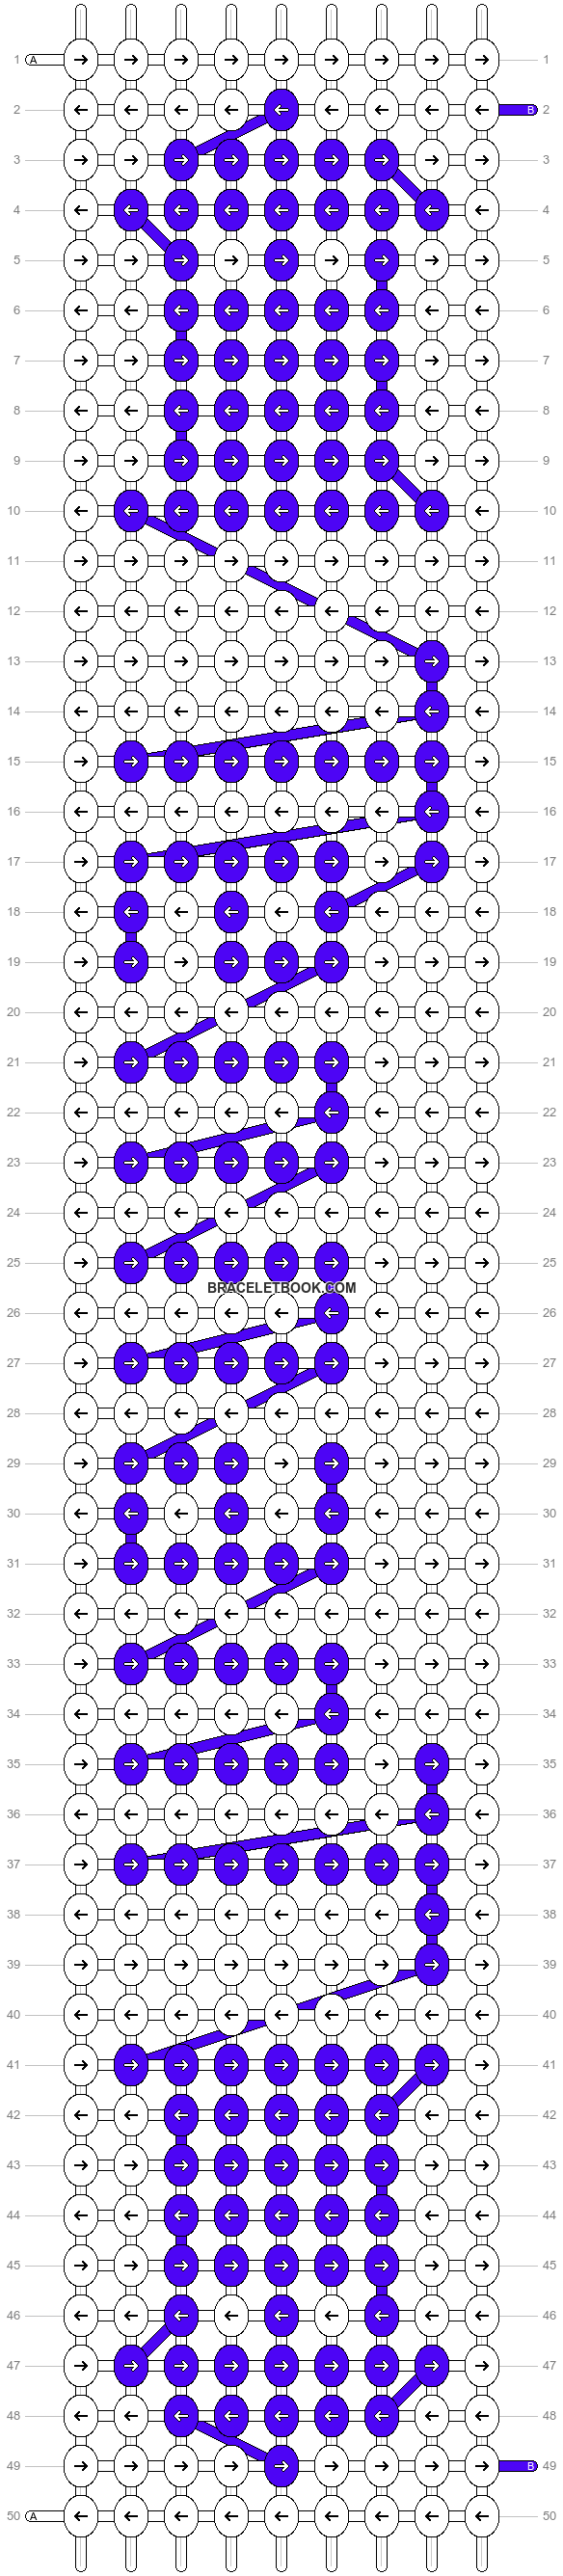 Alpha pattern #10796 pattern